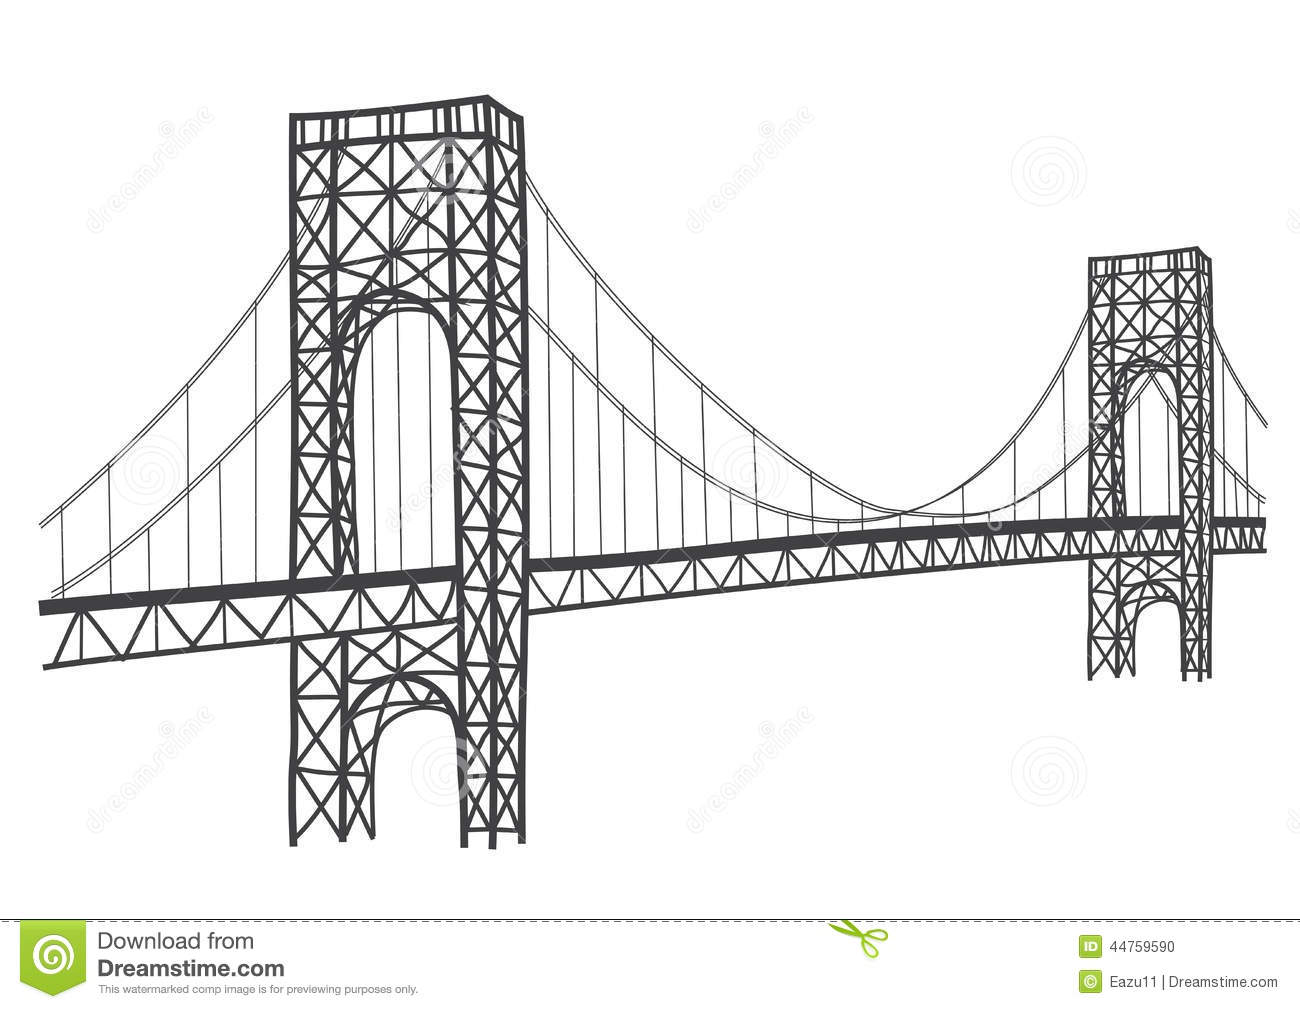 Bridge clipart: Washington Bridge Clipart